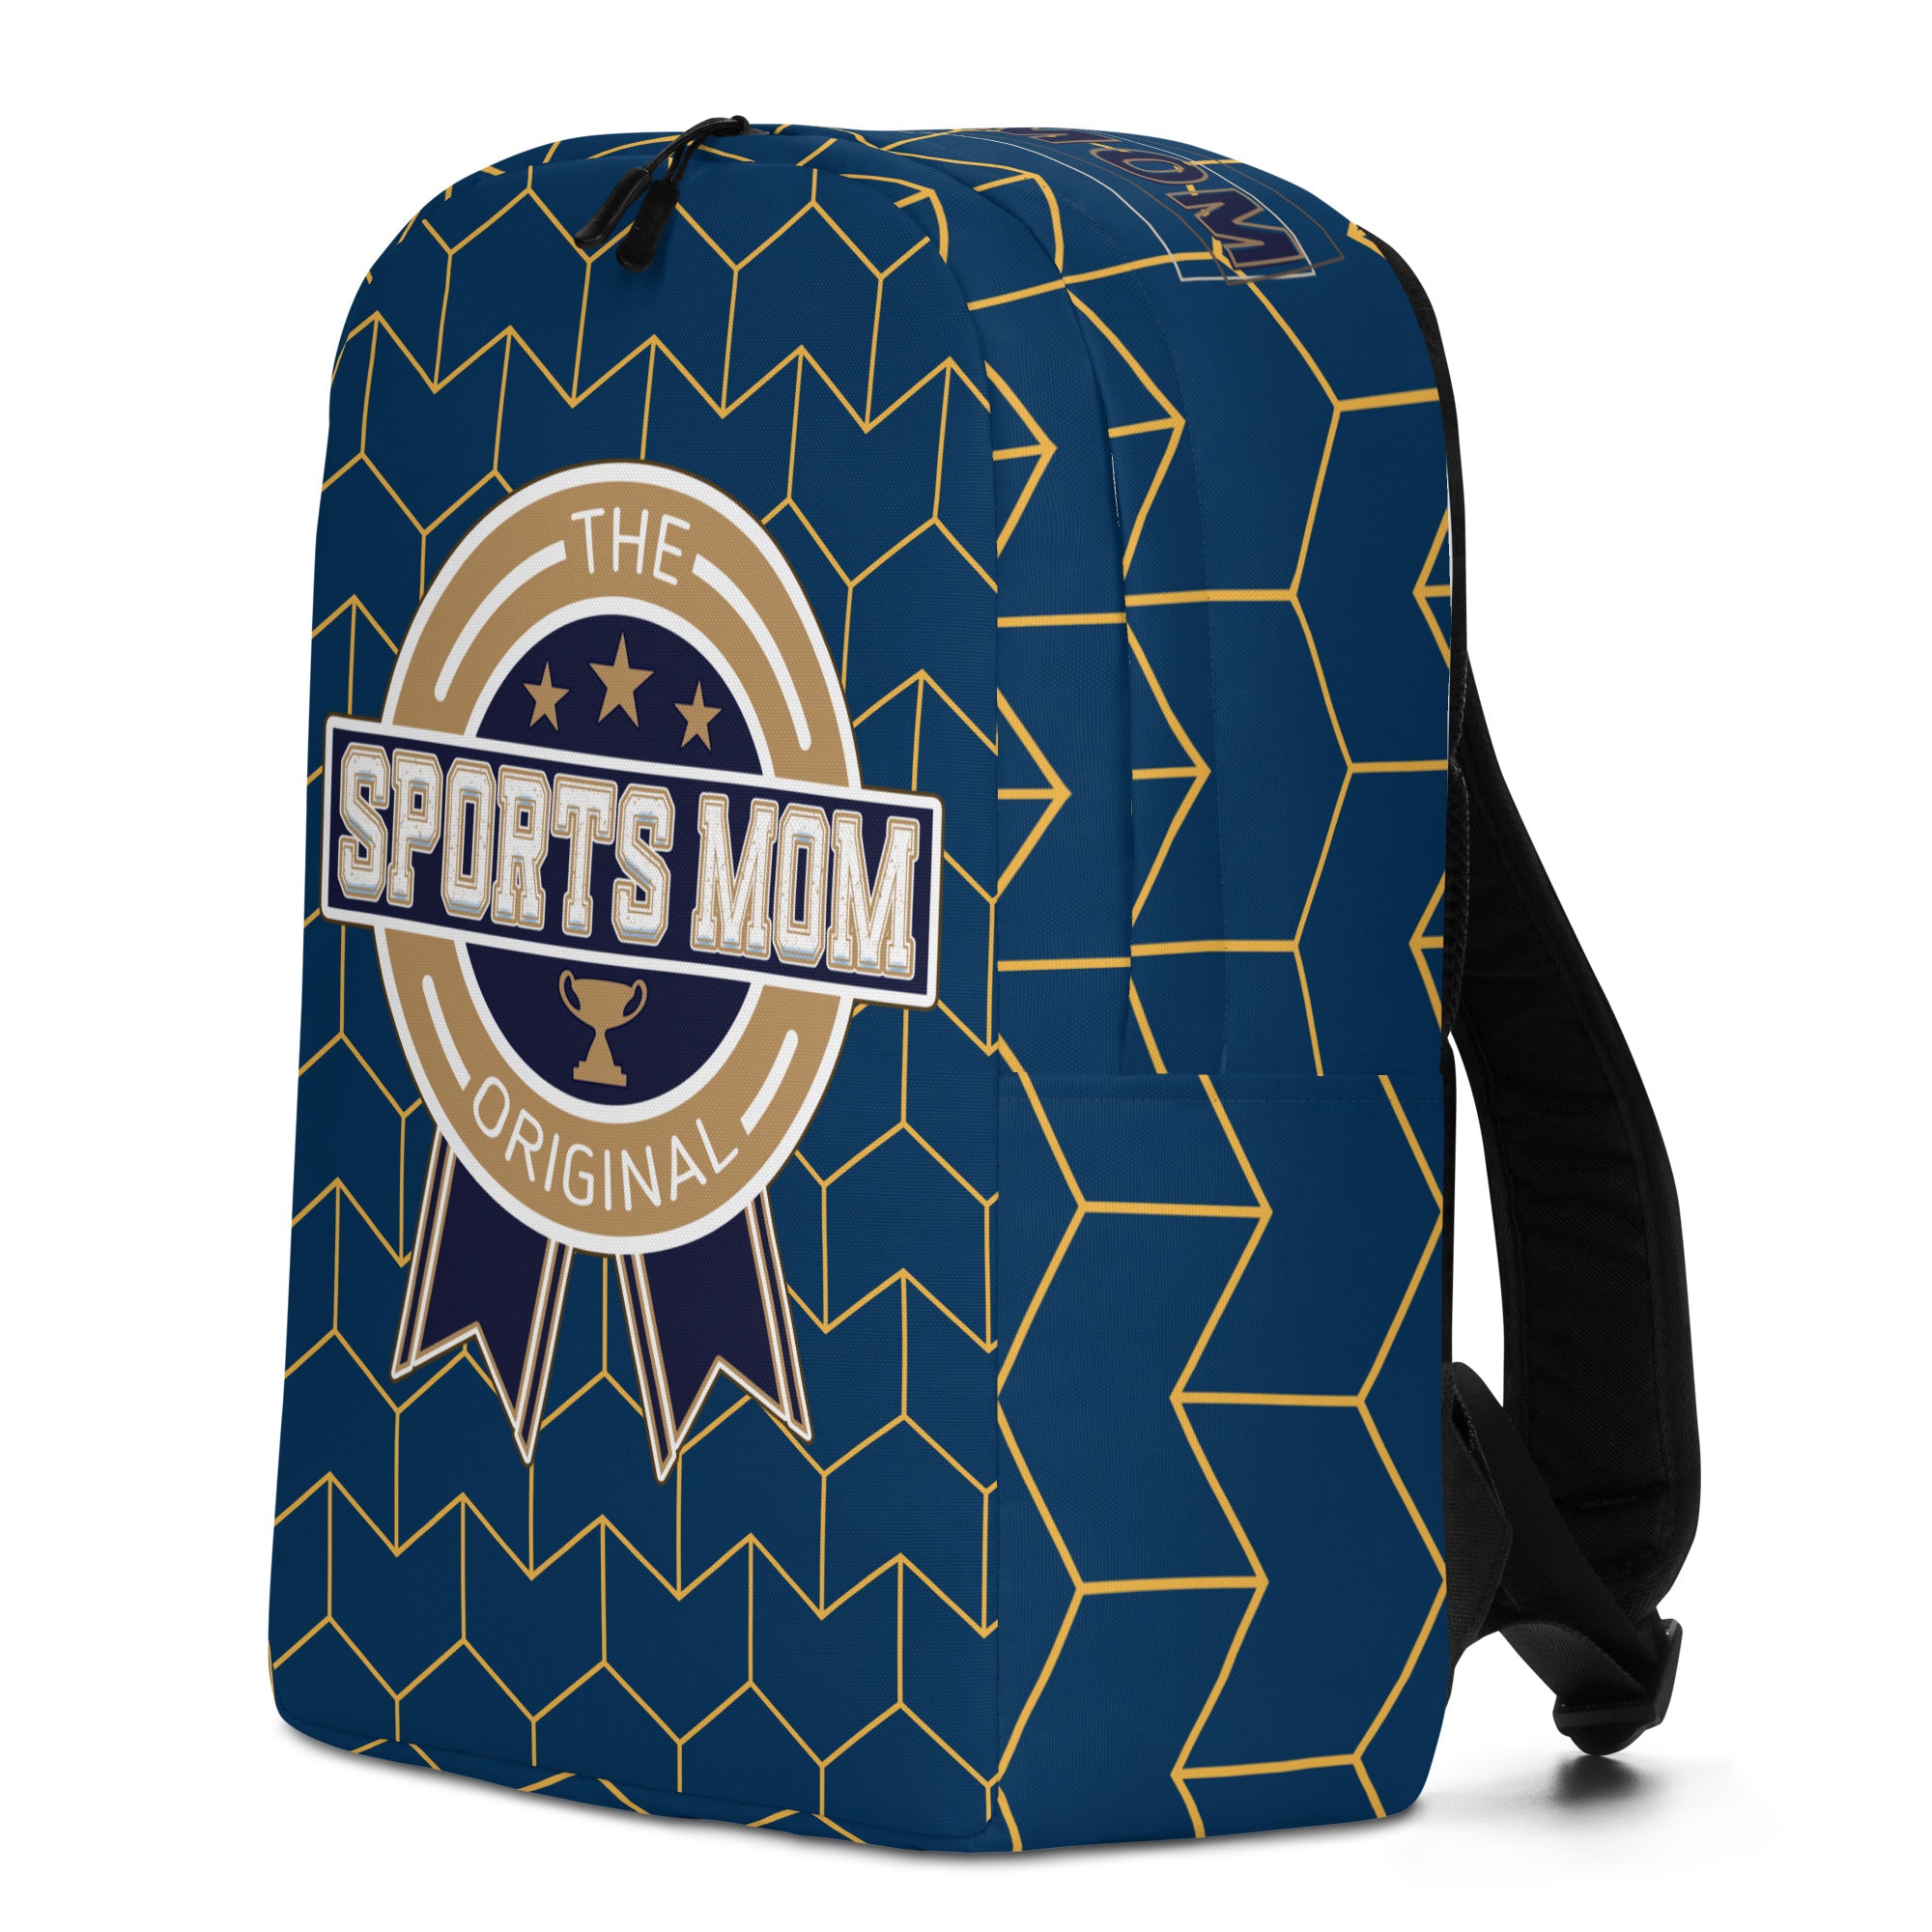 Sports Mom Minimalist Backpack - Away Game - Modern Tile